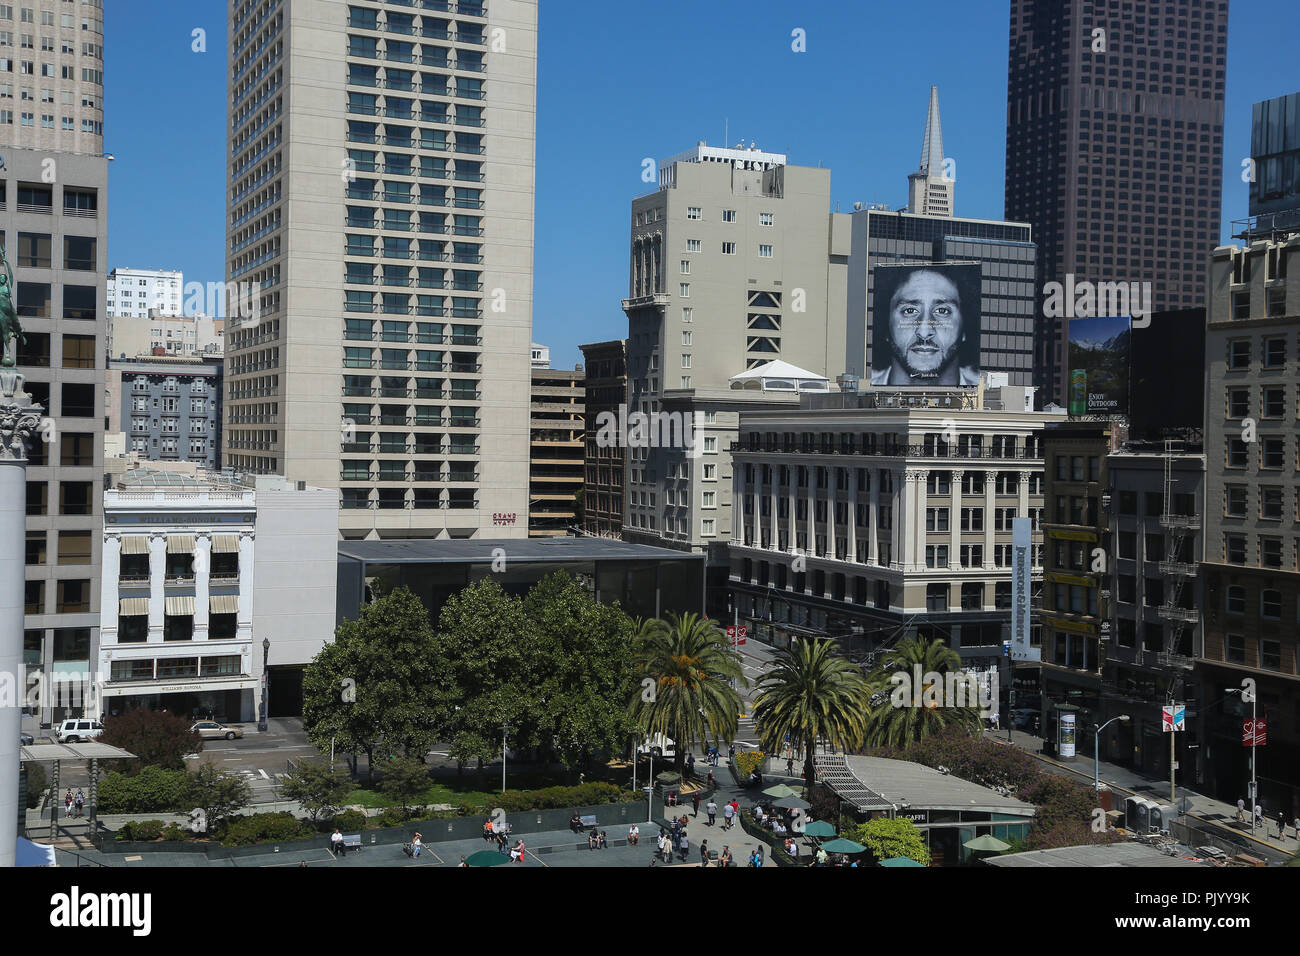 San Francisco, California, USA. 9 Sept 2018 - Colin Kaepernick's Nike  sponsorship advert on top of a building in San Francisco's Union Square.  Credit: Dinendra Haria/Alamy Live News Stock Photo - Alamy